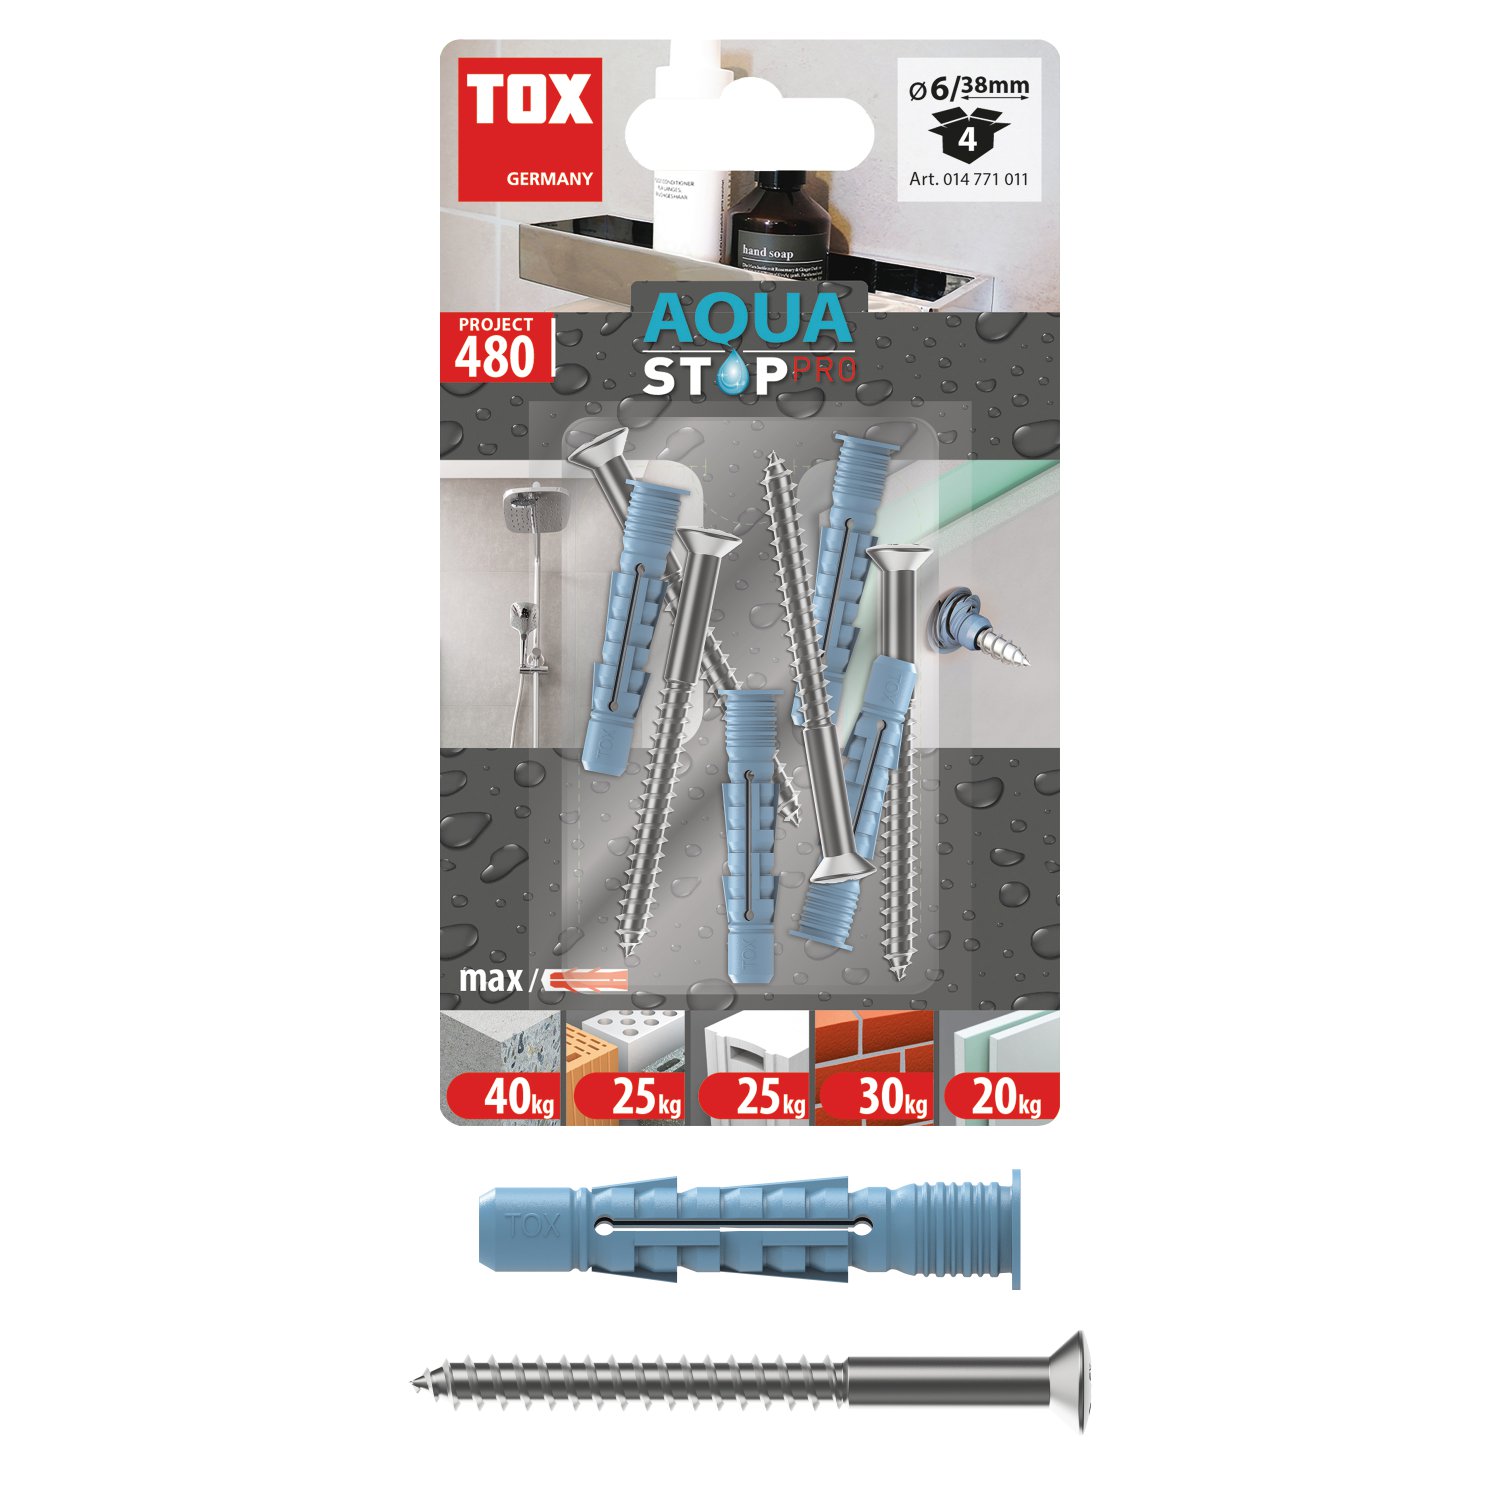 TOX Allzweckdübel Aqua Stop Pro mit Schraube